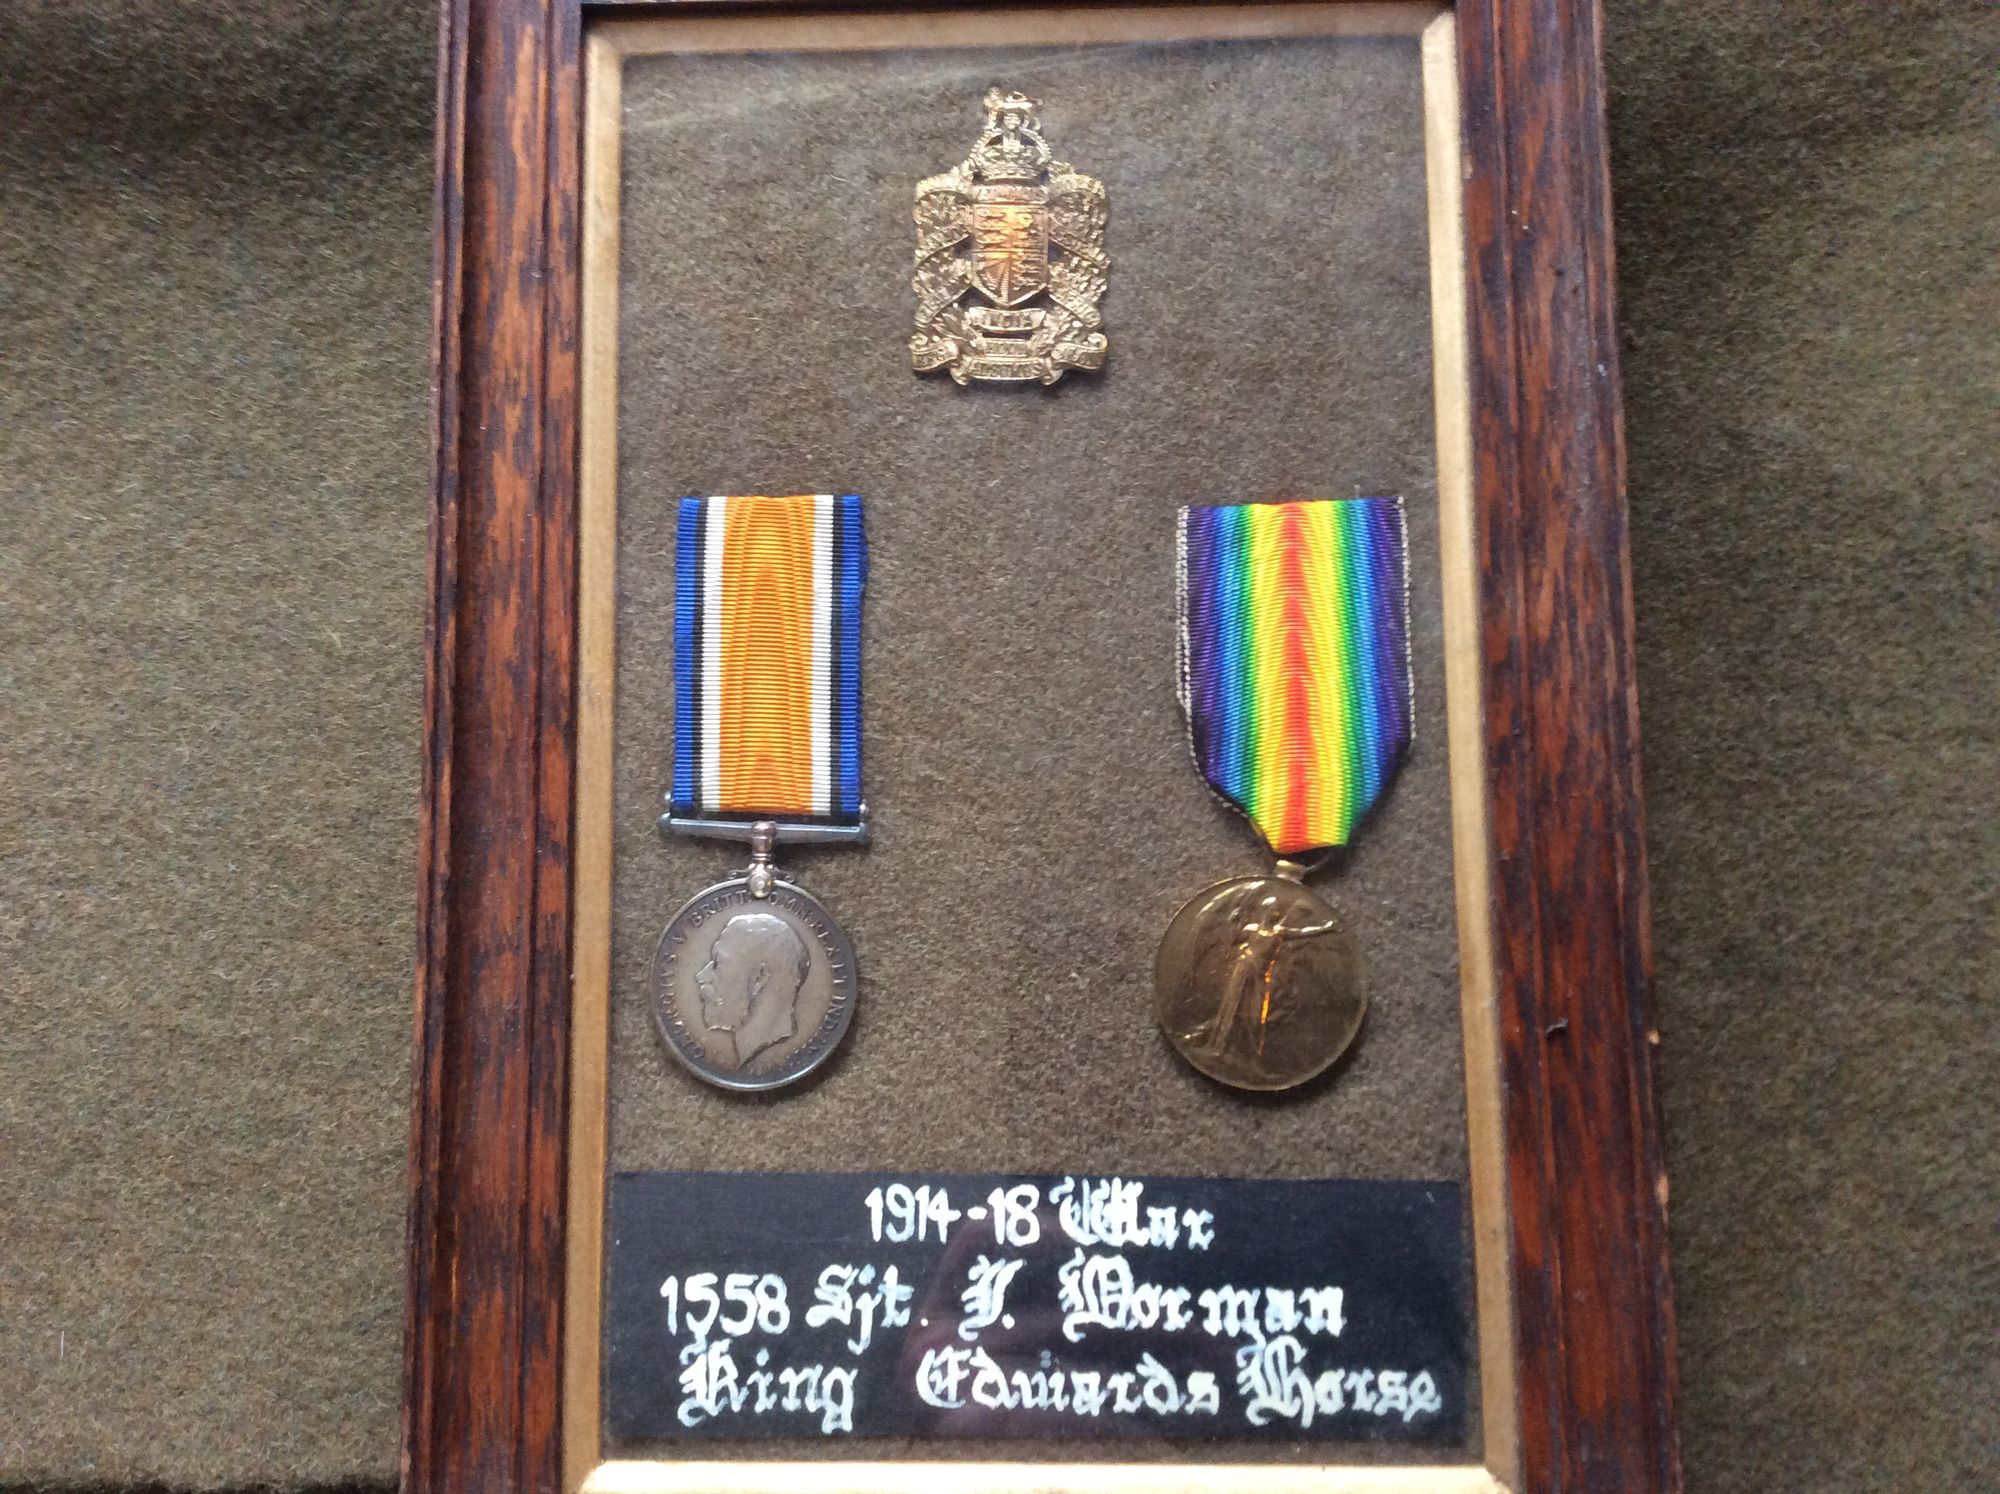 DORMAN, James. 2113. Serjeant KEH and 1558 2KEH. British War Medal and Victory Medal with cap badge, 1914/15 Star missing.